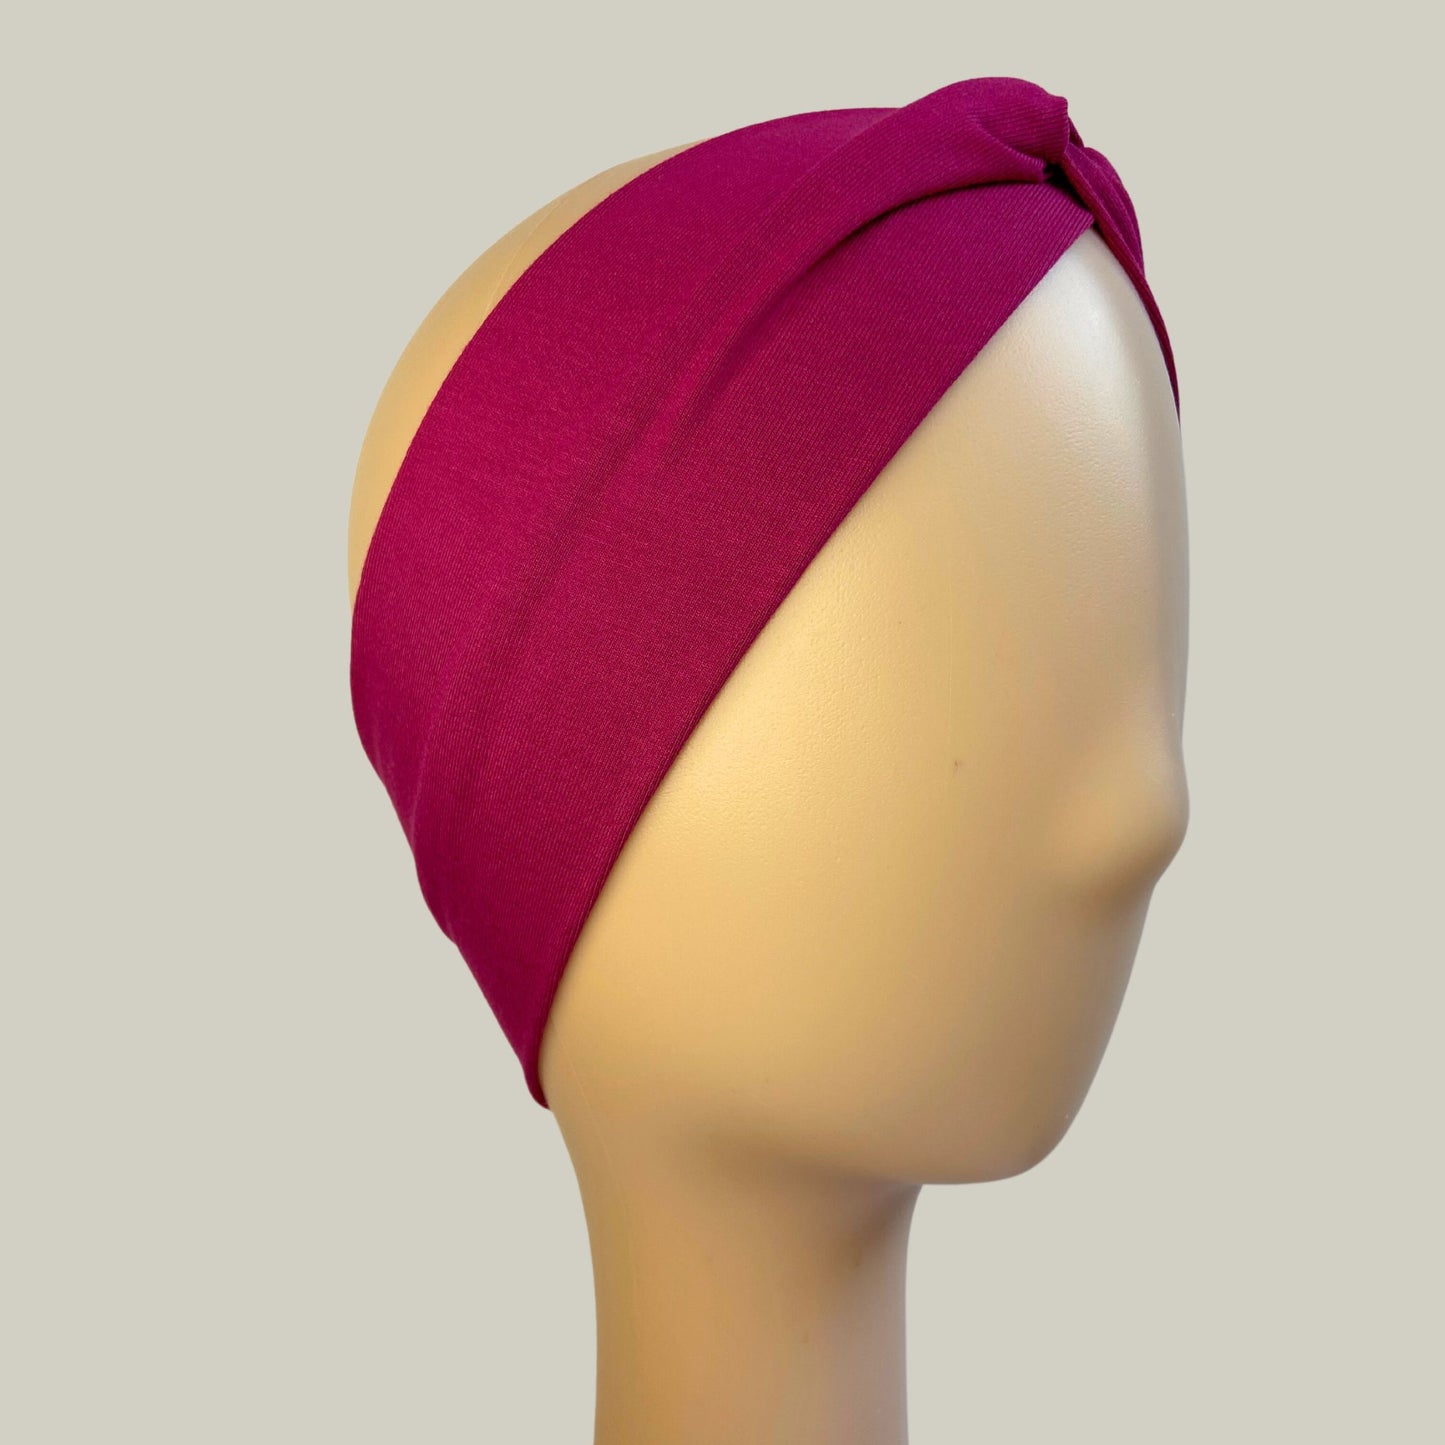 Fuchsia Headband